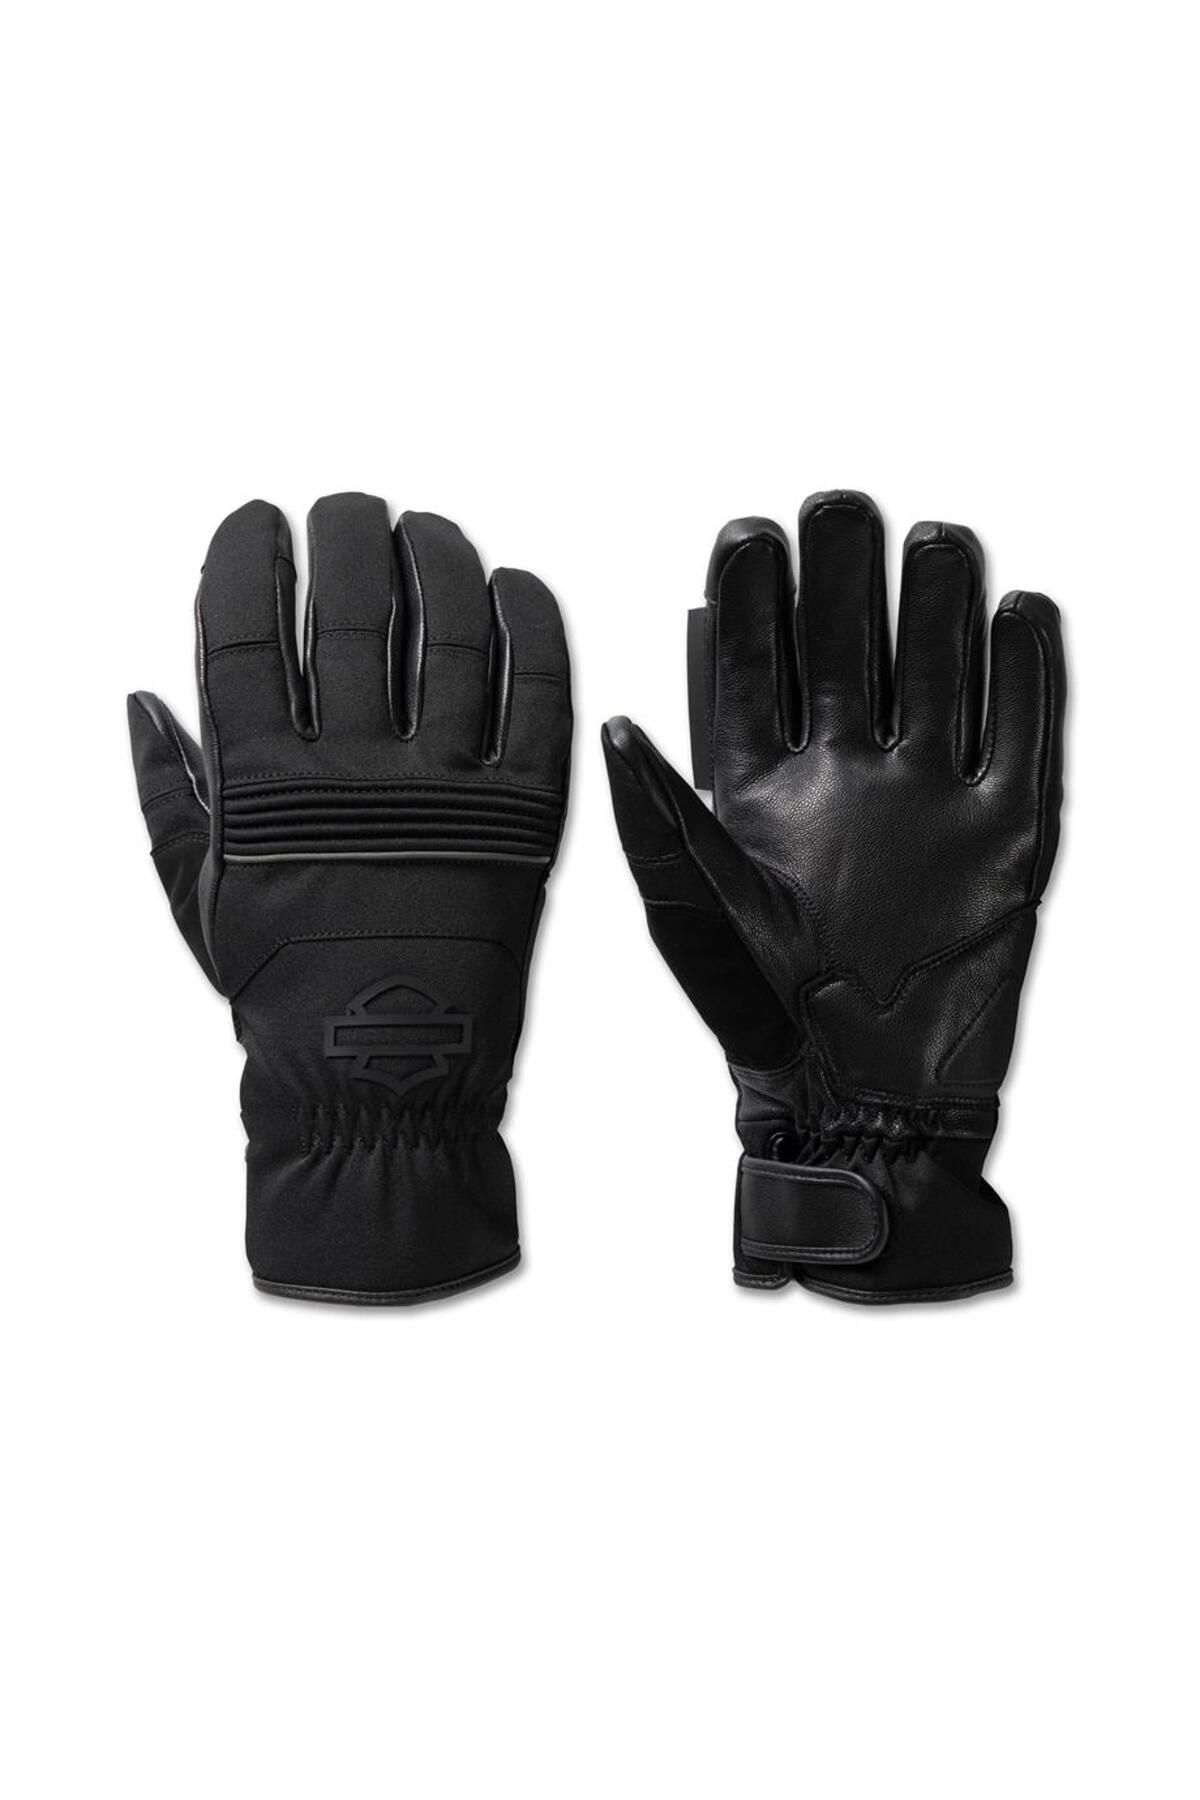 Harley Davidson Harley-davidson Men's Apex Mixed Media Gloves